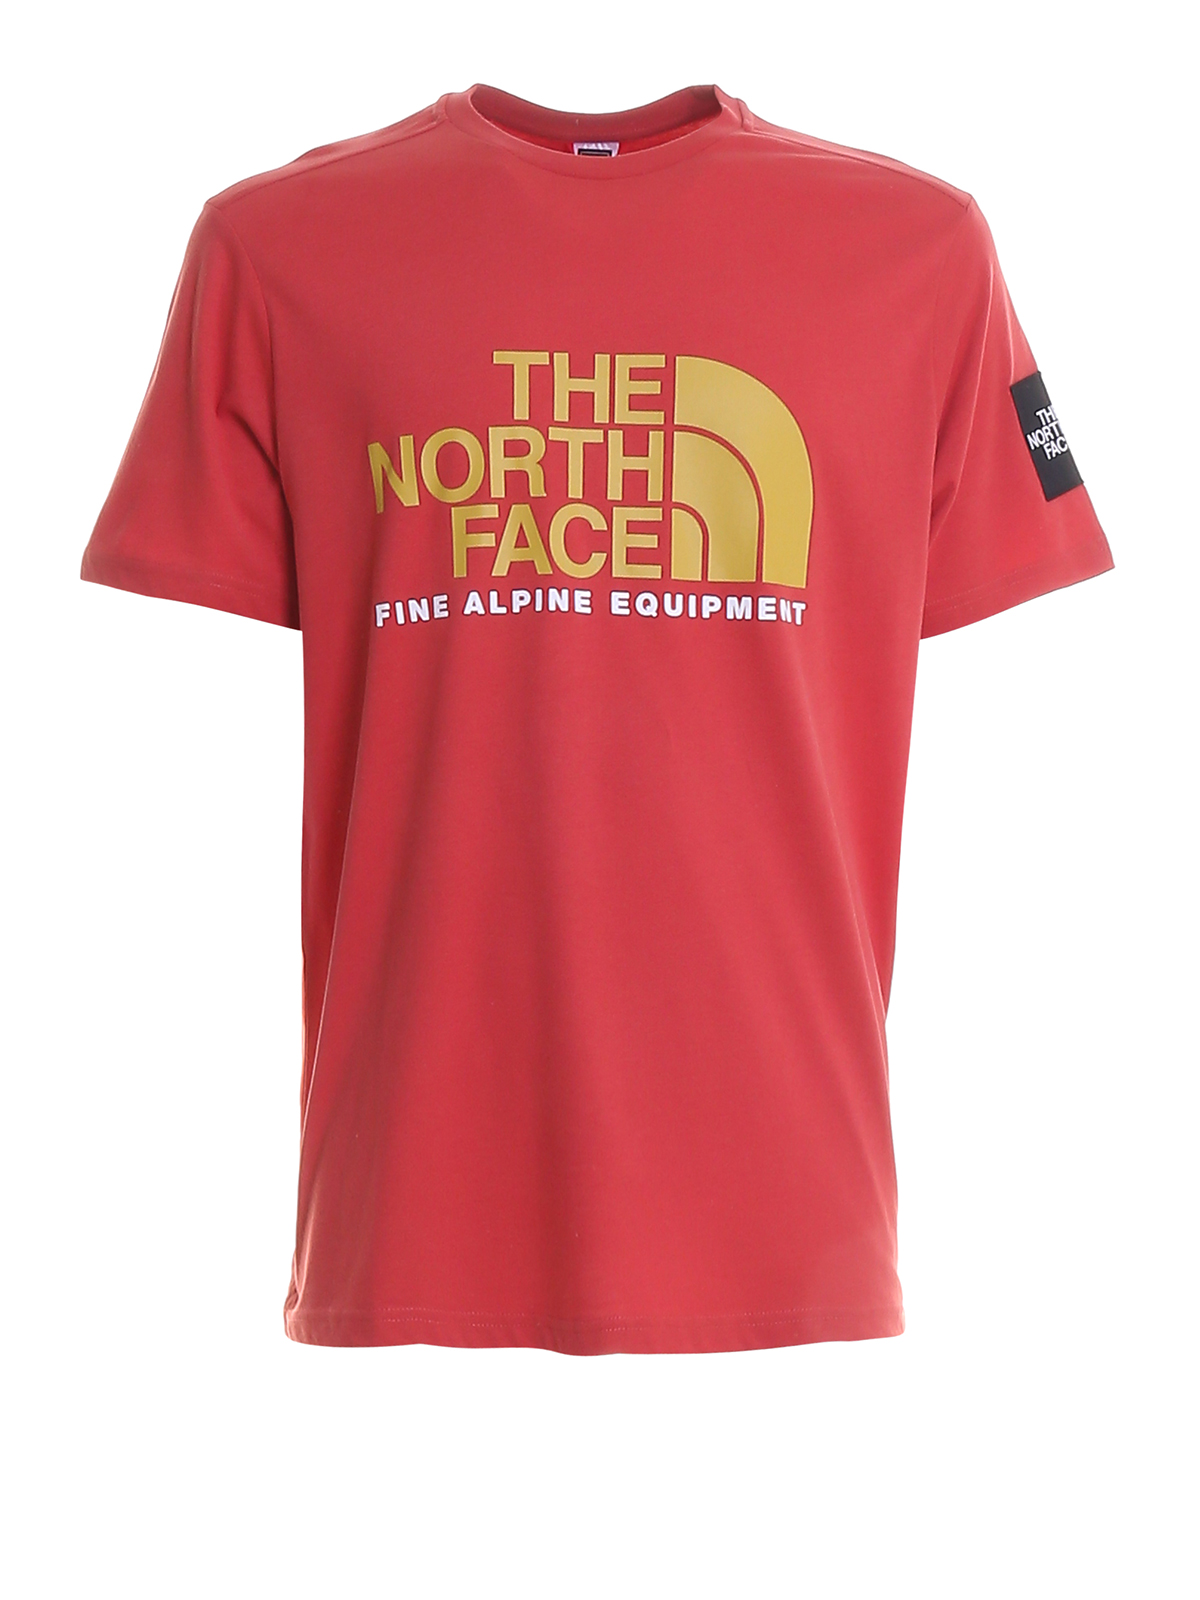 Mechanisch natuurlijk Overtreden T-shirts The North Face - Fine Alpine Equipment red jersey T-shirt -  NF0A4M6NPKB